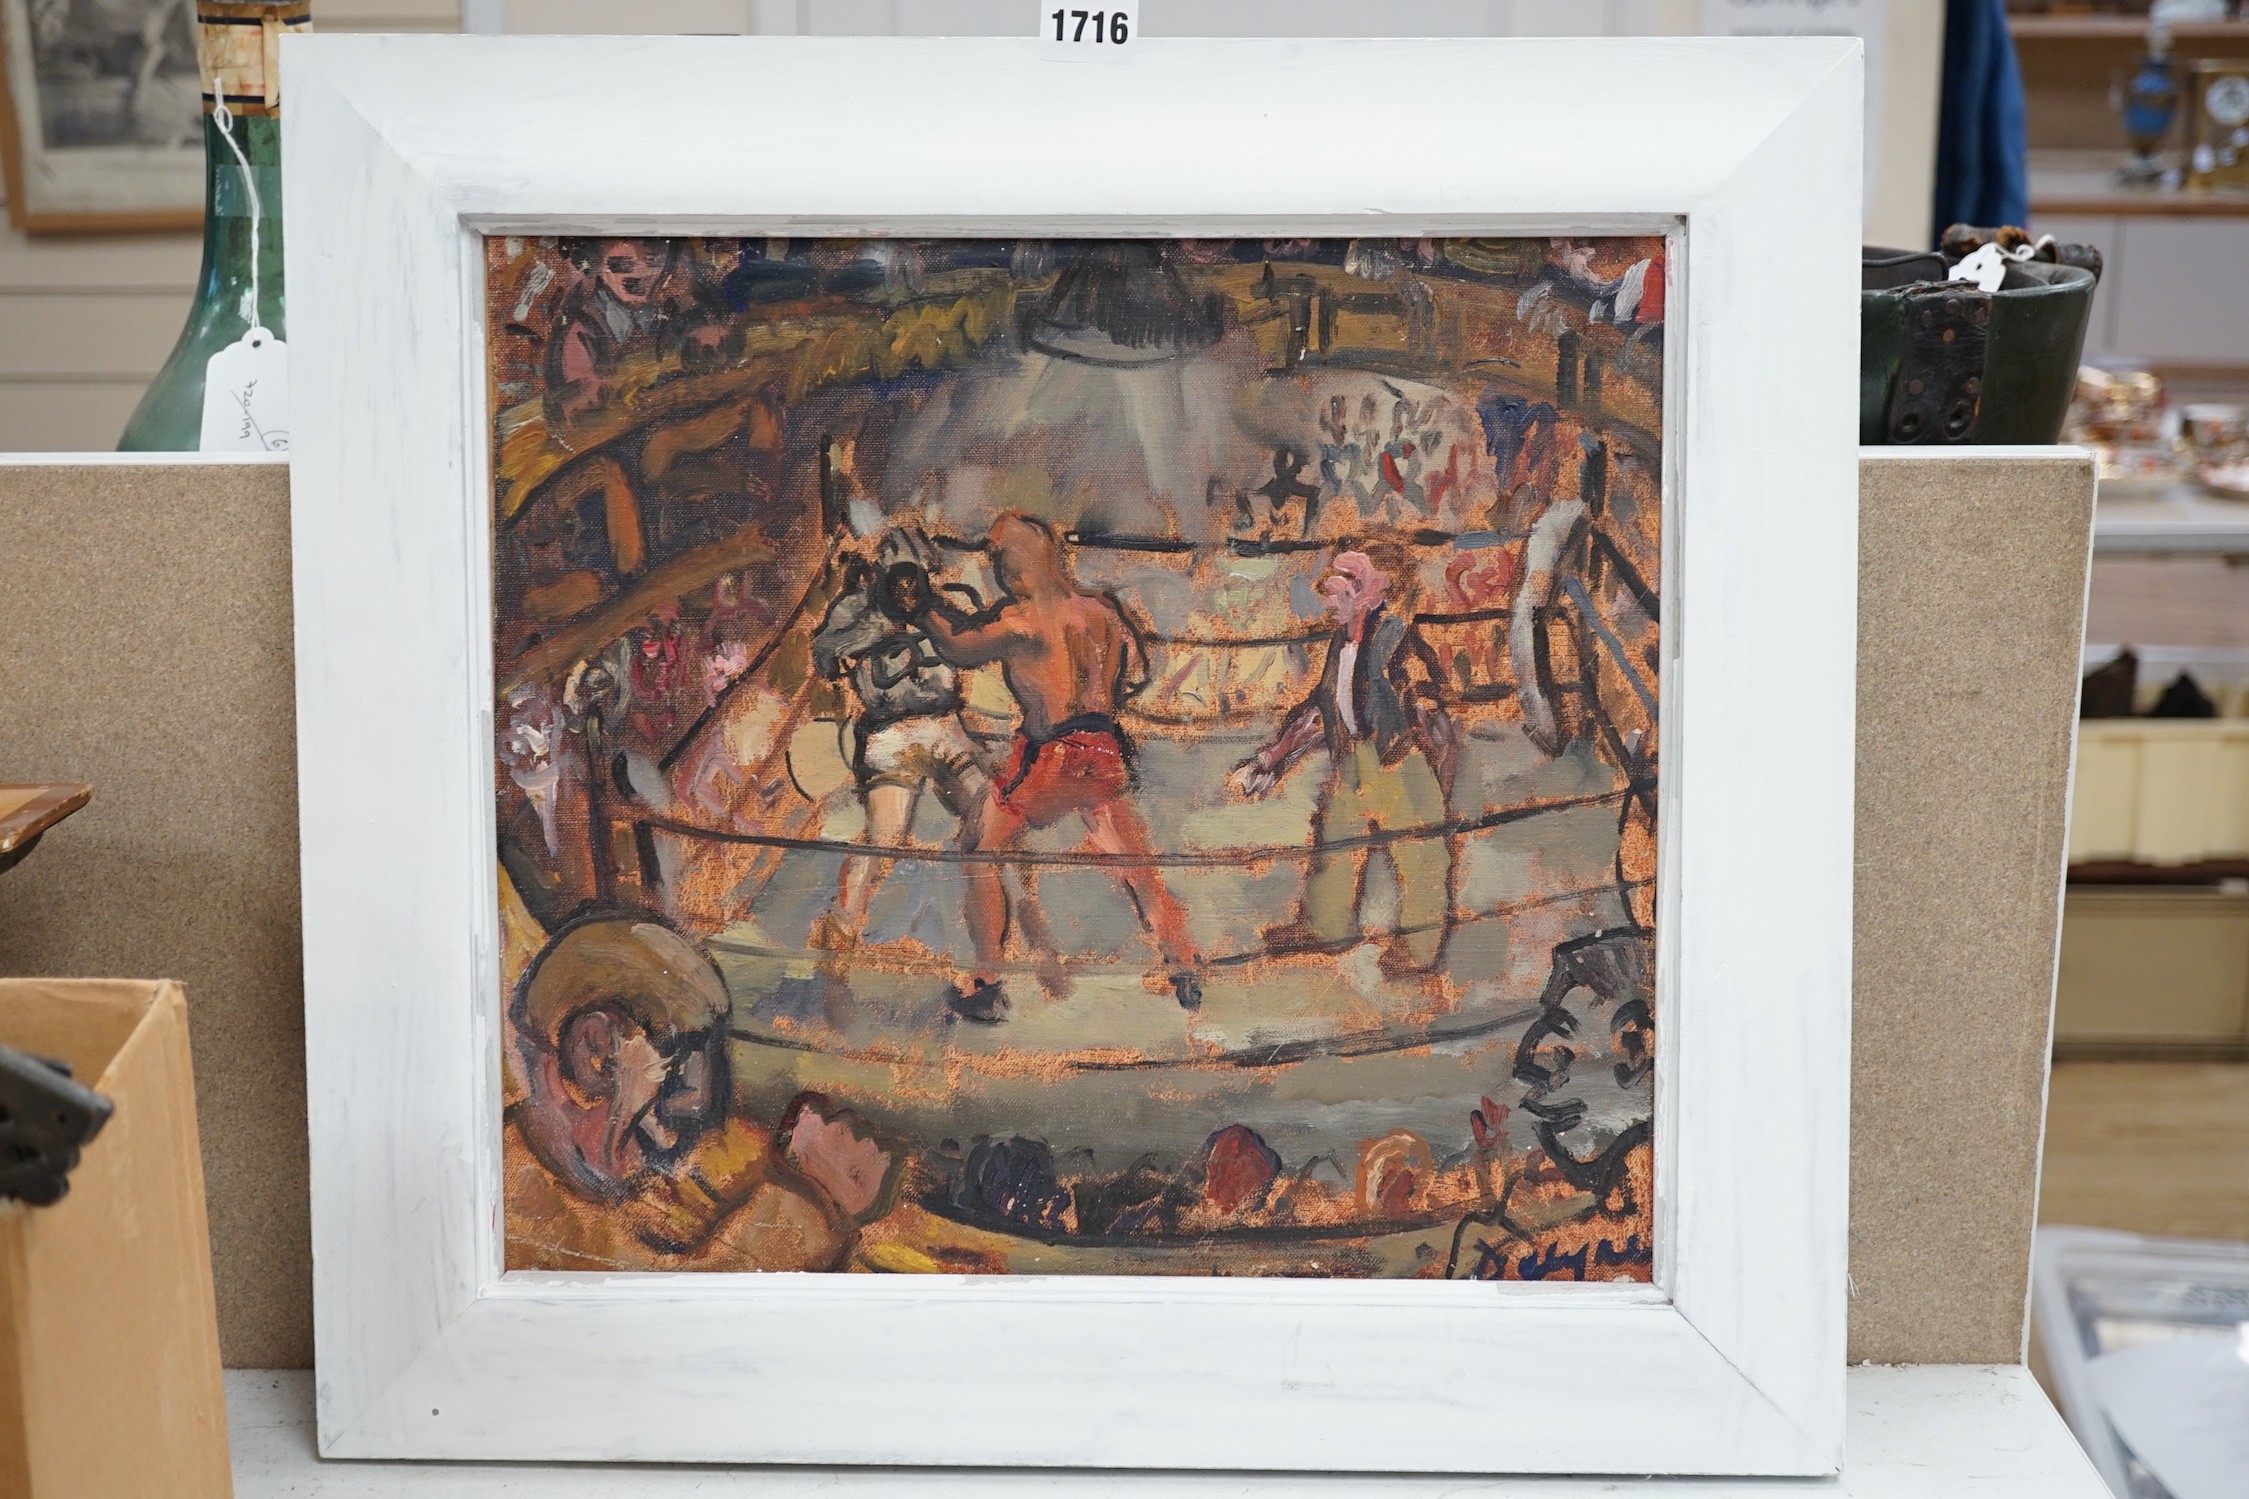 Modern British, oil on board, Boxing scene, indistinctly signed, 34 x 38cm